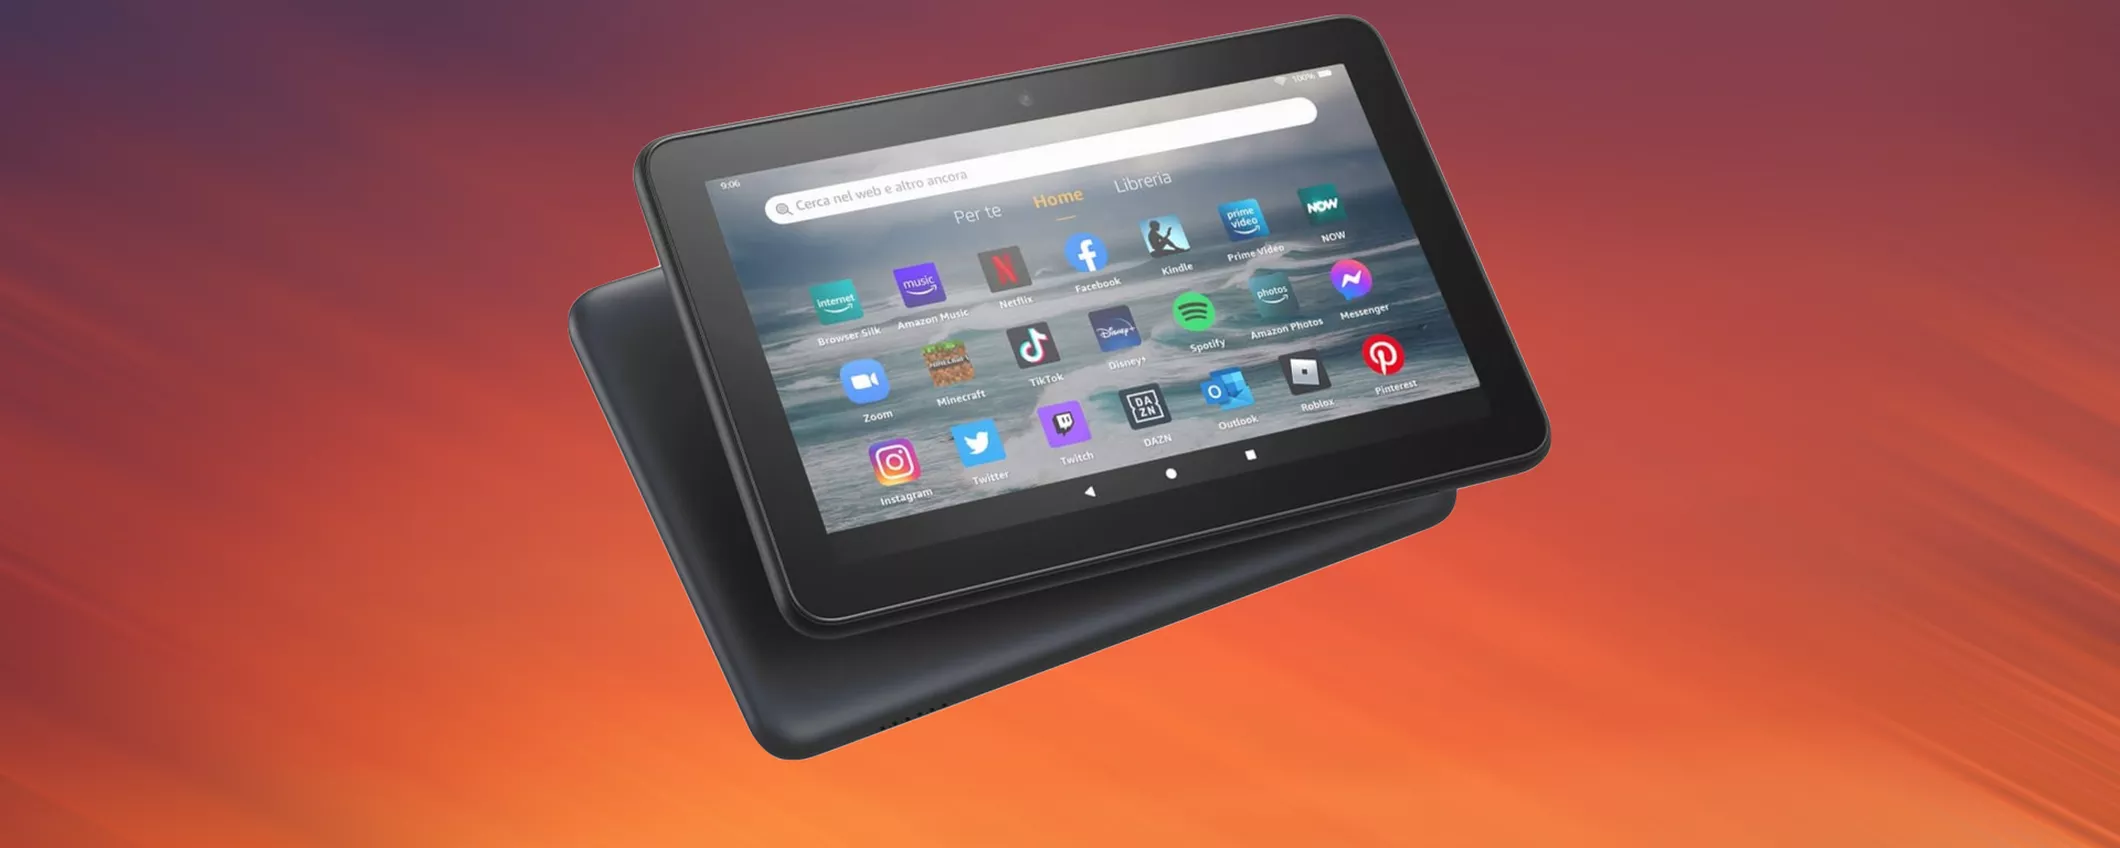 Amazon Fire 7: buon tablet per domotica, streaming e bambini a 54€